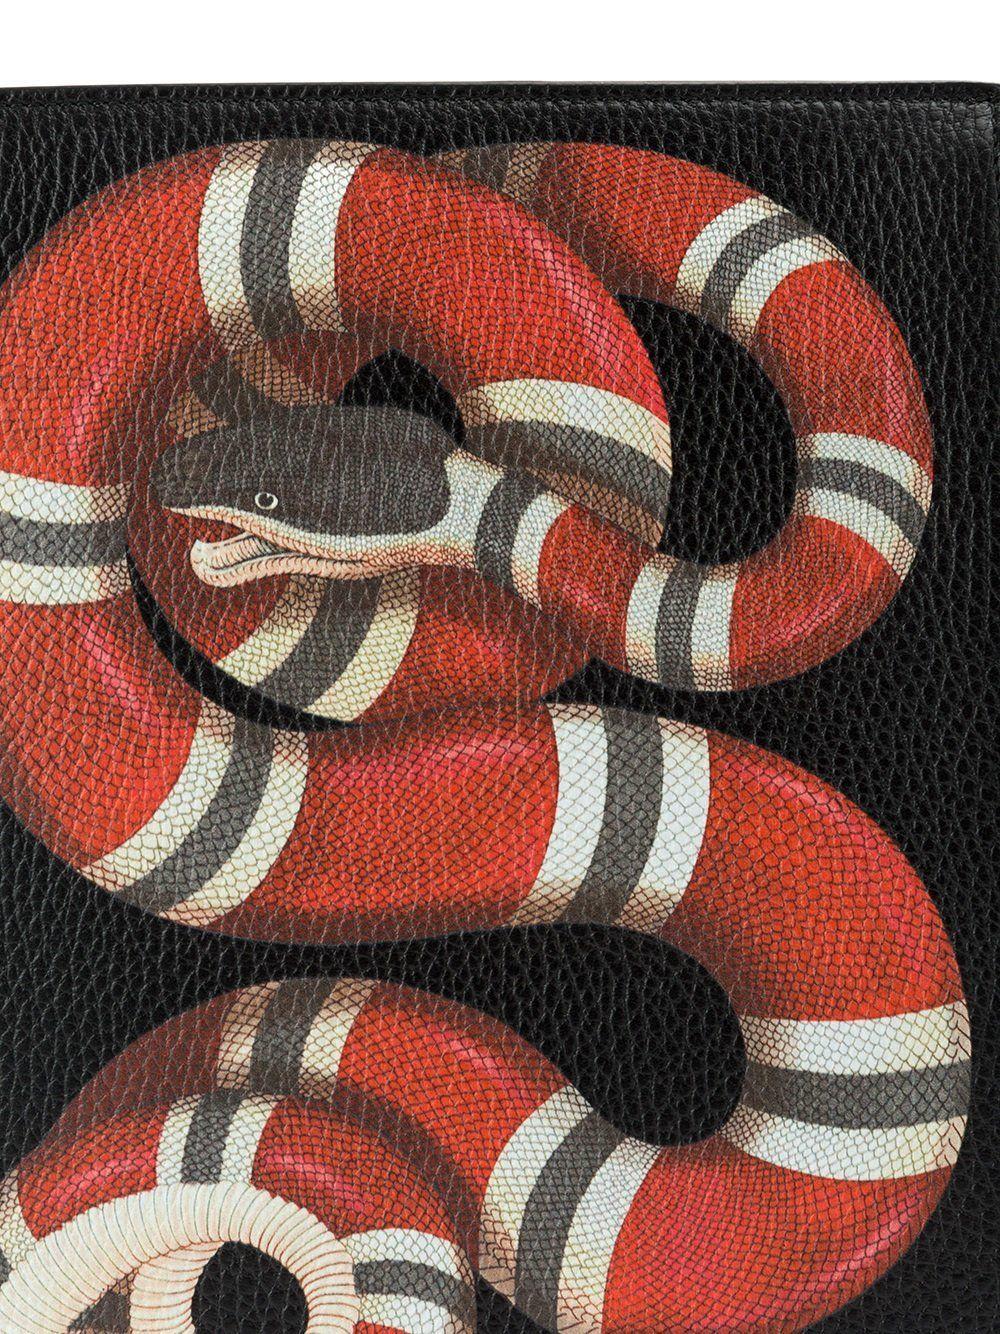 Coral Snake Gucci Logo - Gucci Snake Wallpapers - Wallpaper Cave